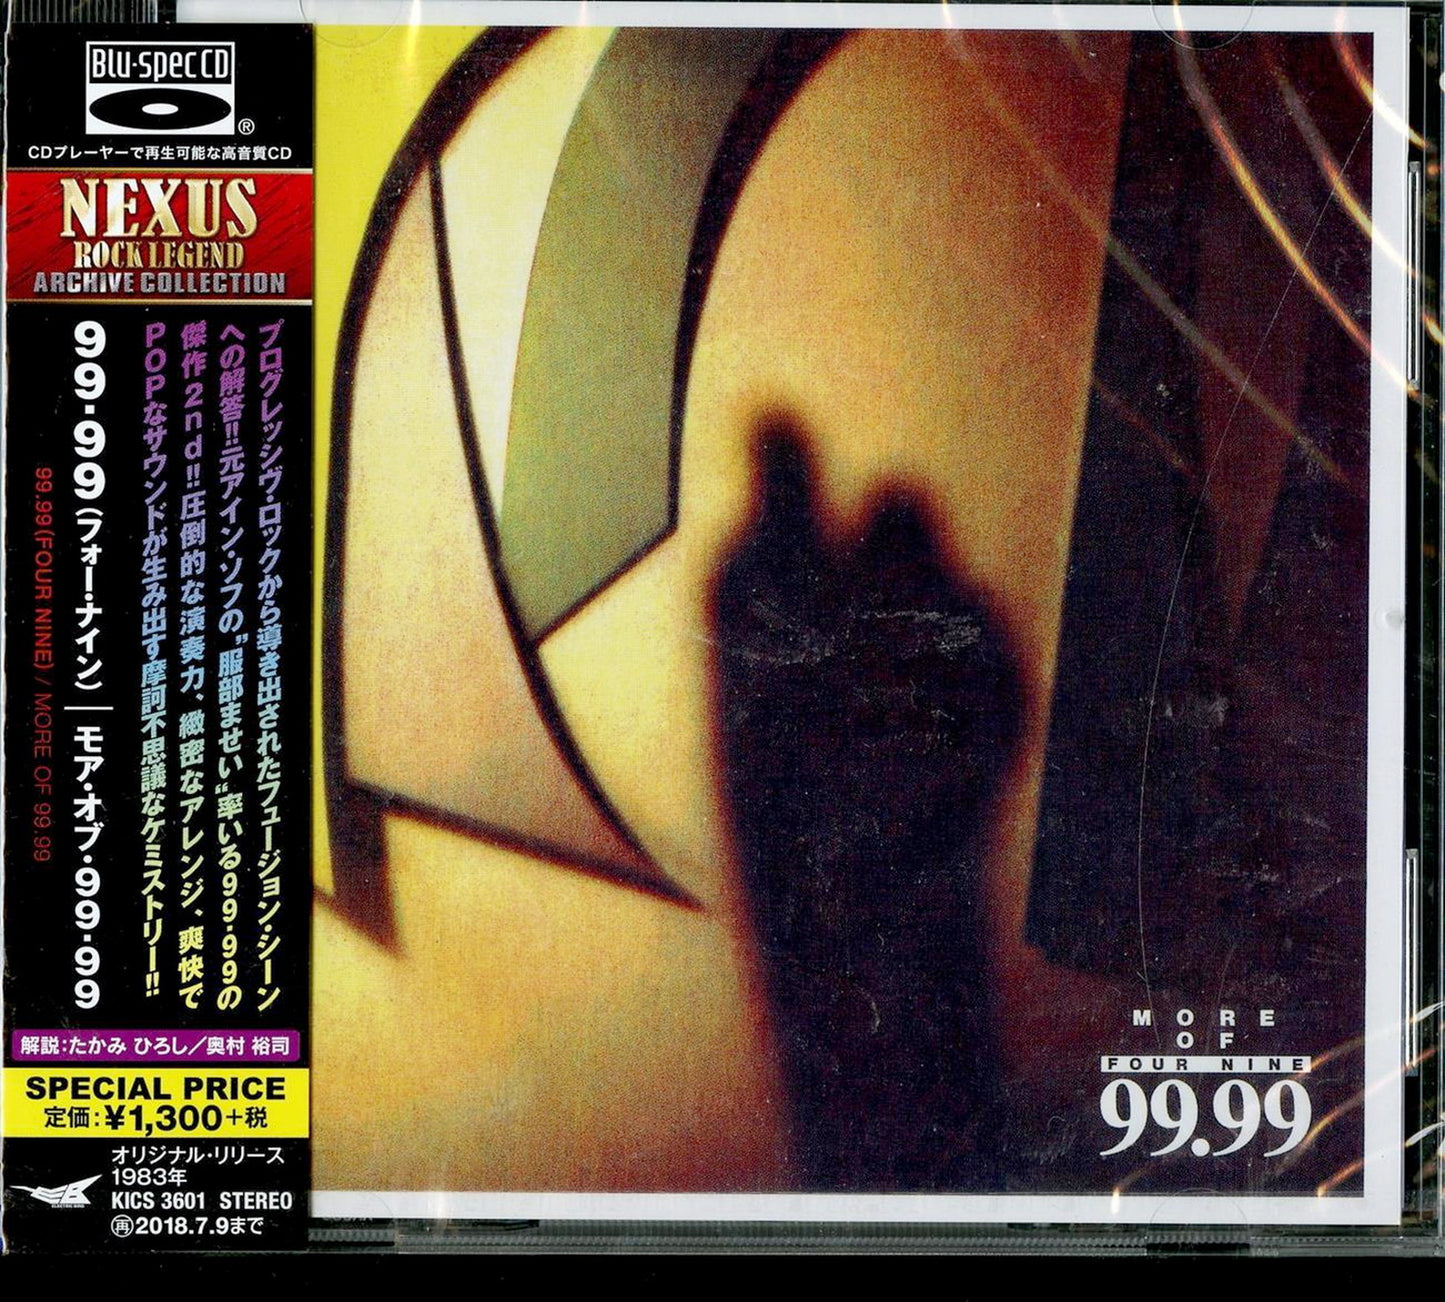 99.99 - More Of 99.99 - Japan  Blu-spec CD